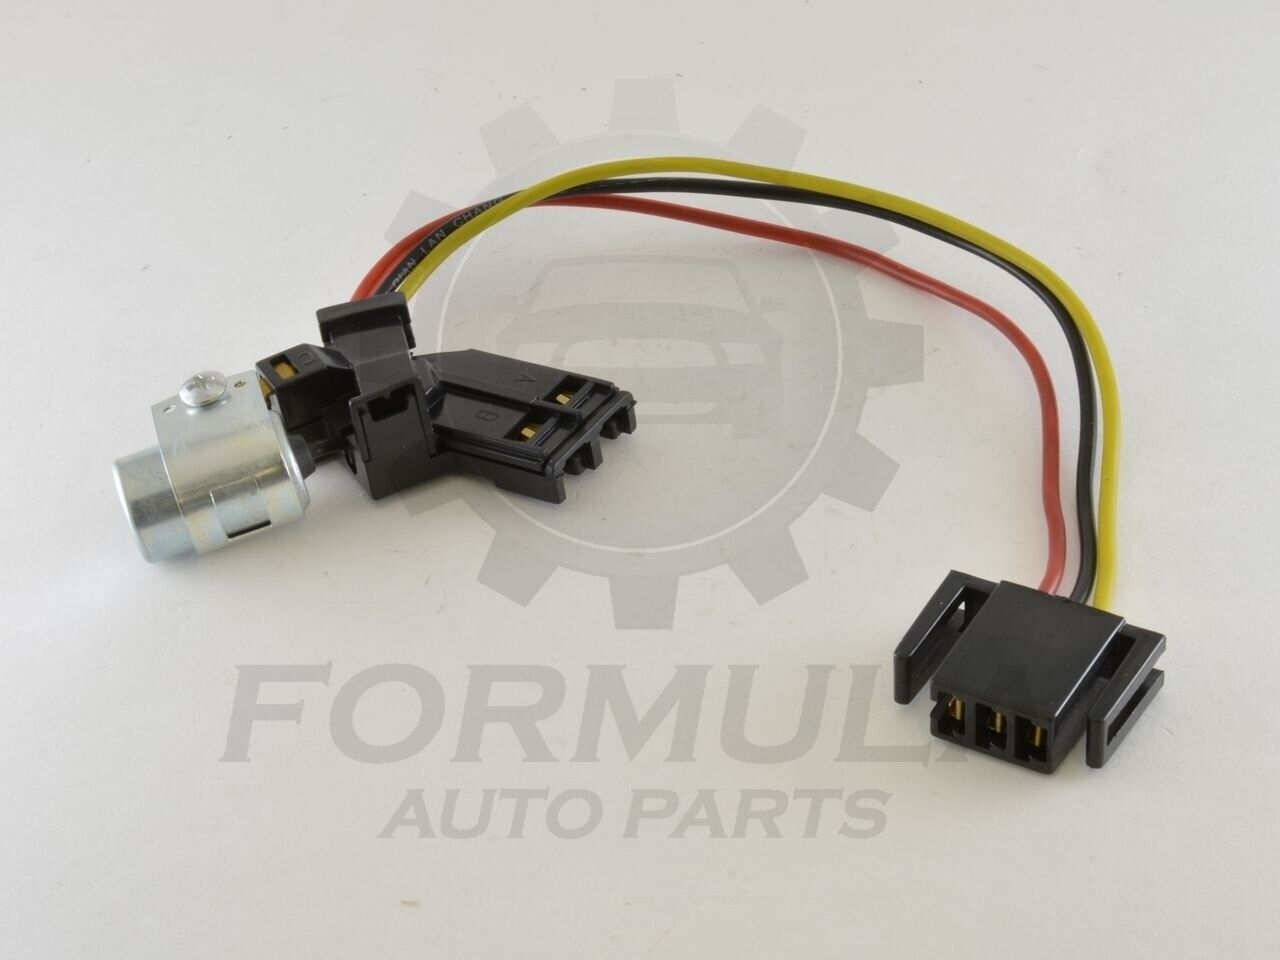 Formula Auto Parts CND52 Capacitor 